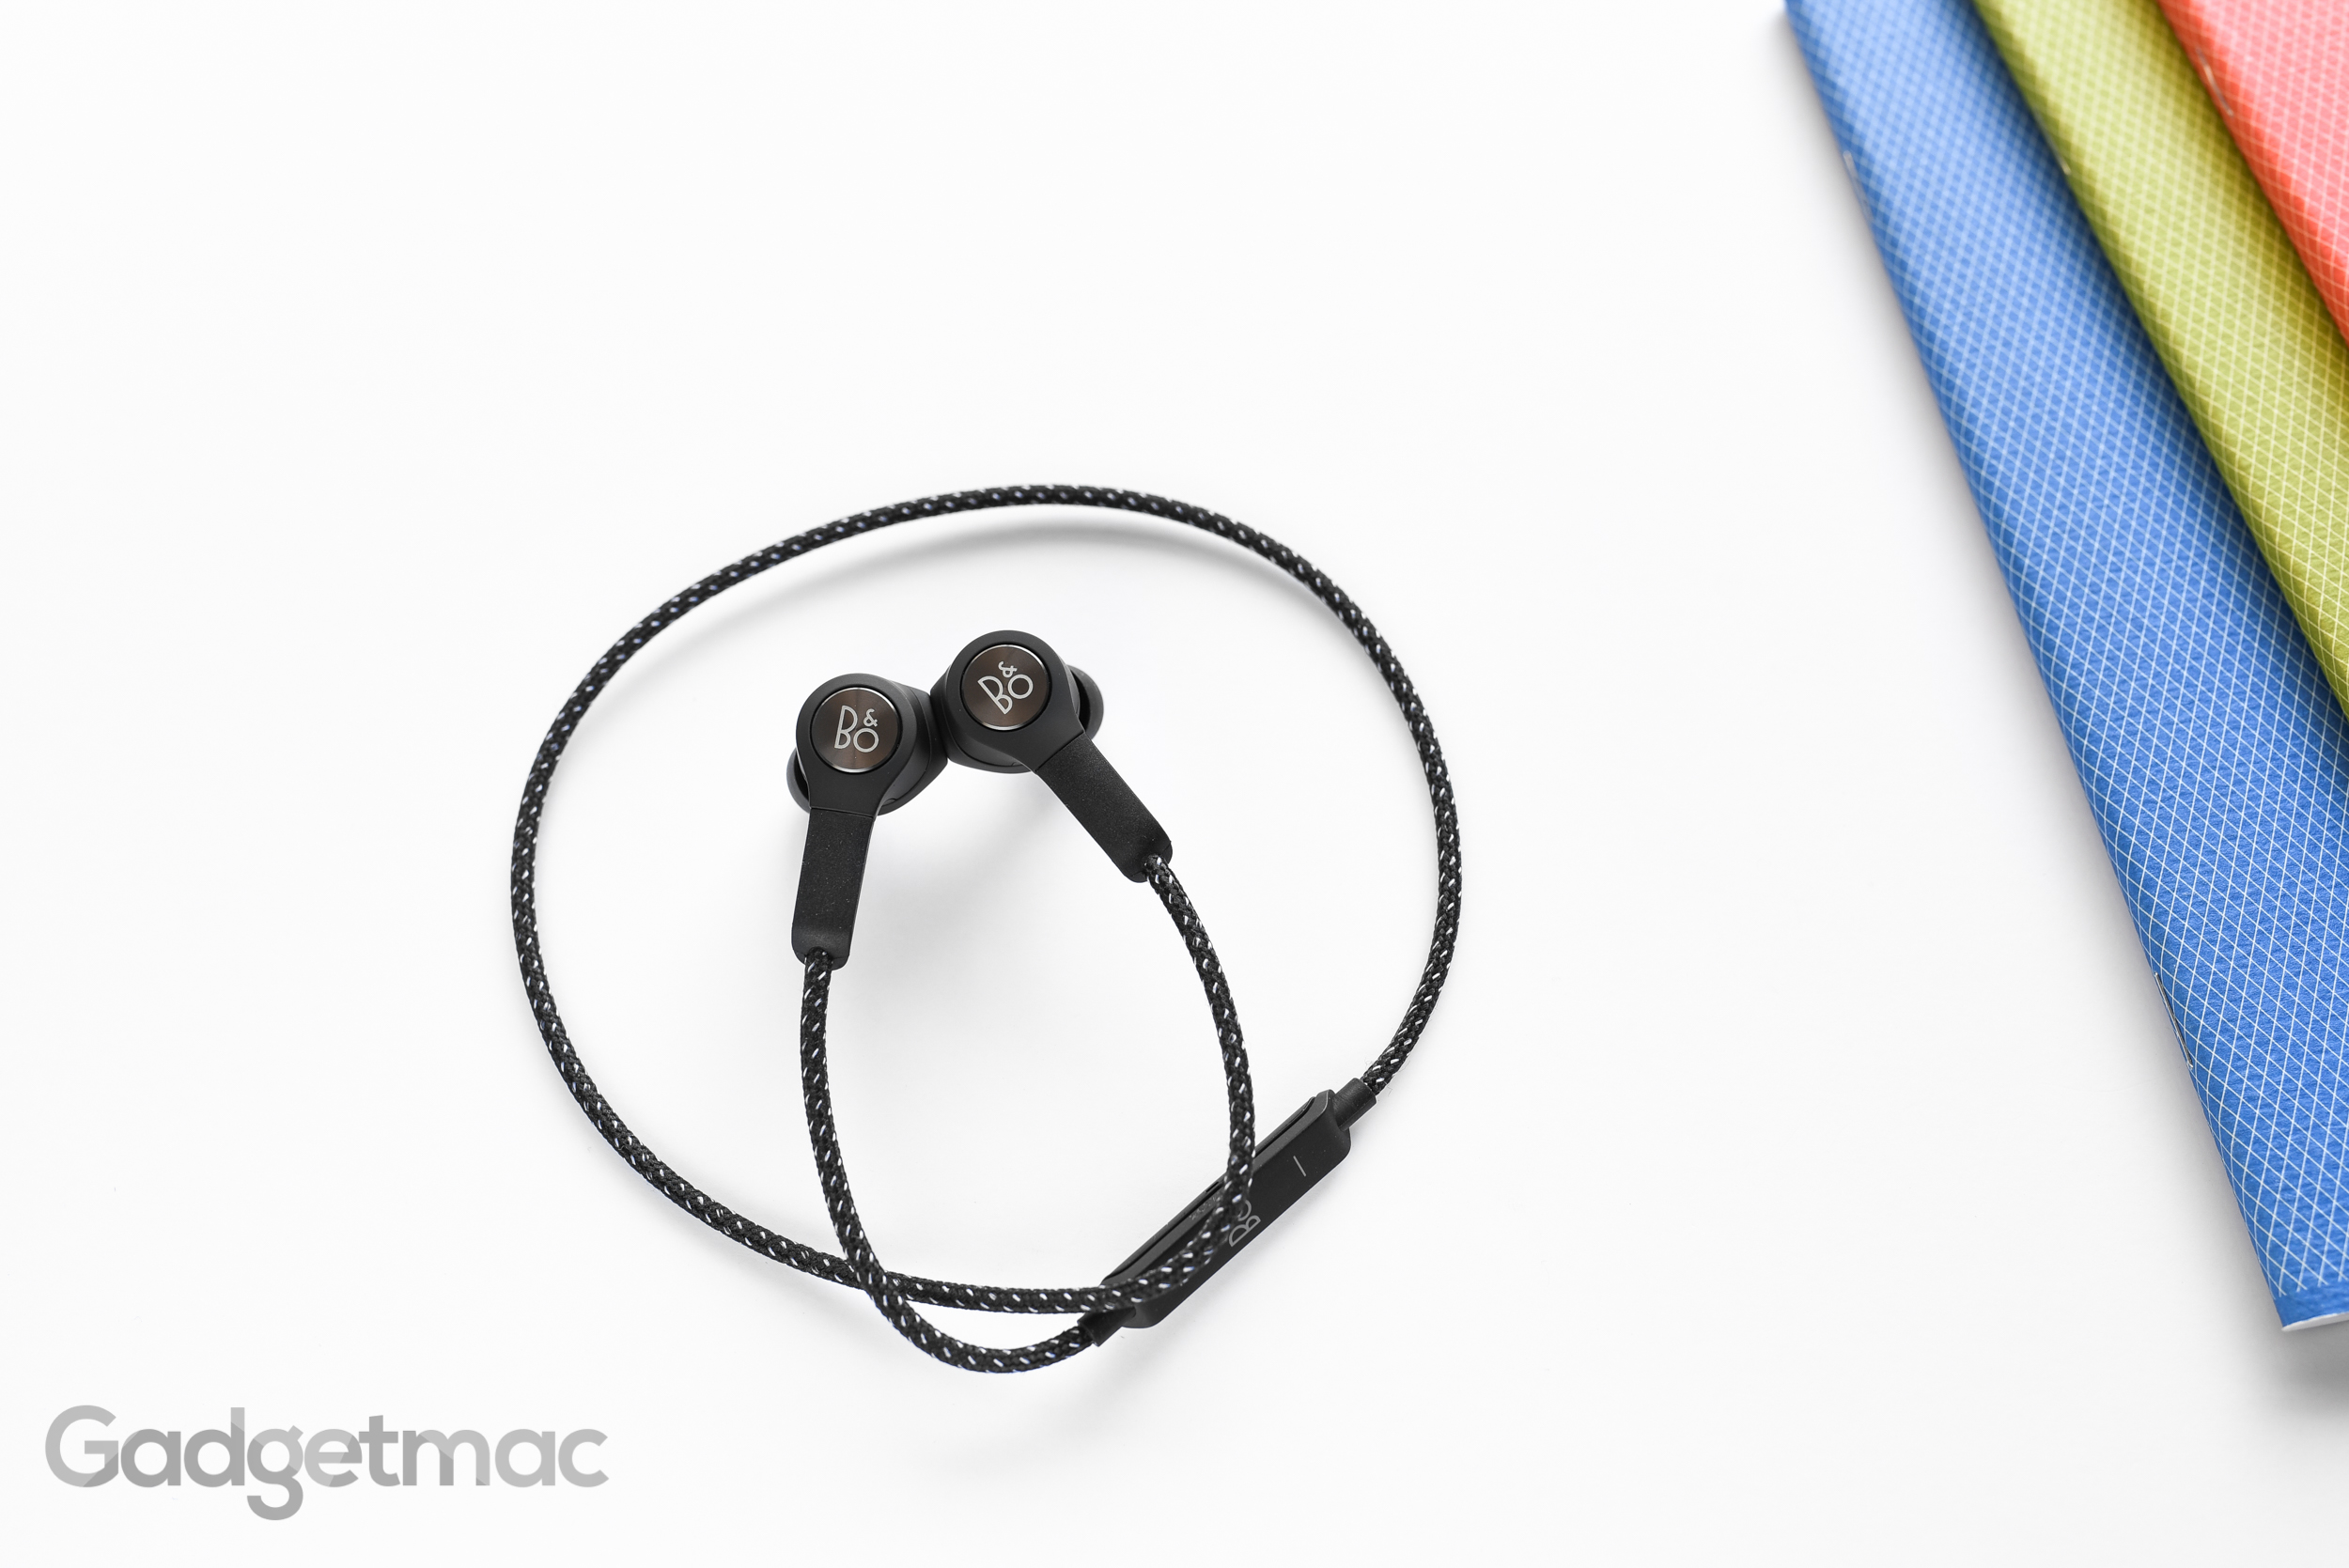 Bang & Olufsen Beoplay H5 Wireless In-Ear Headphones Review — Gadgetmac